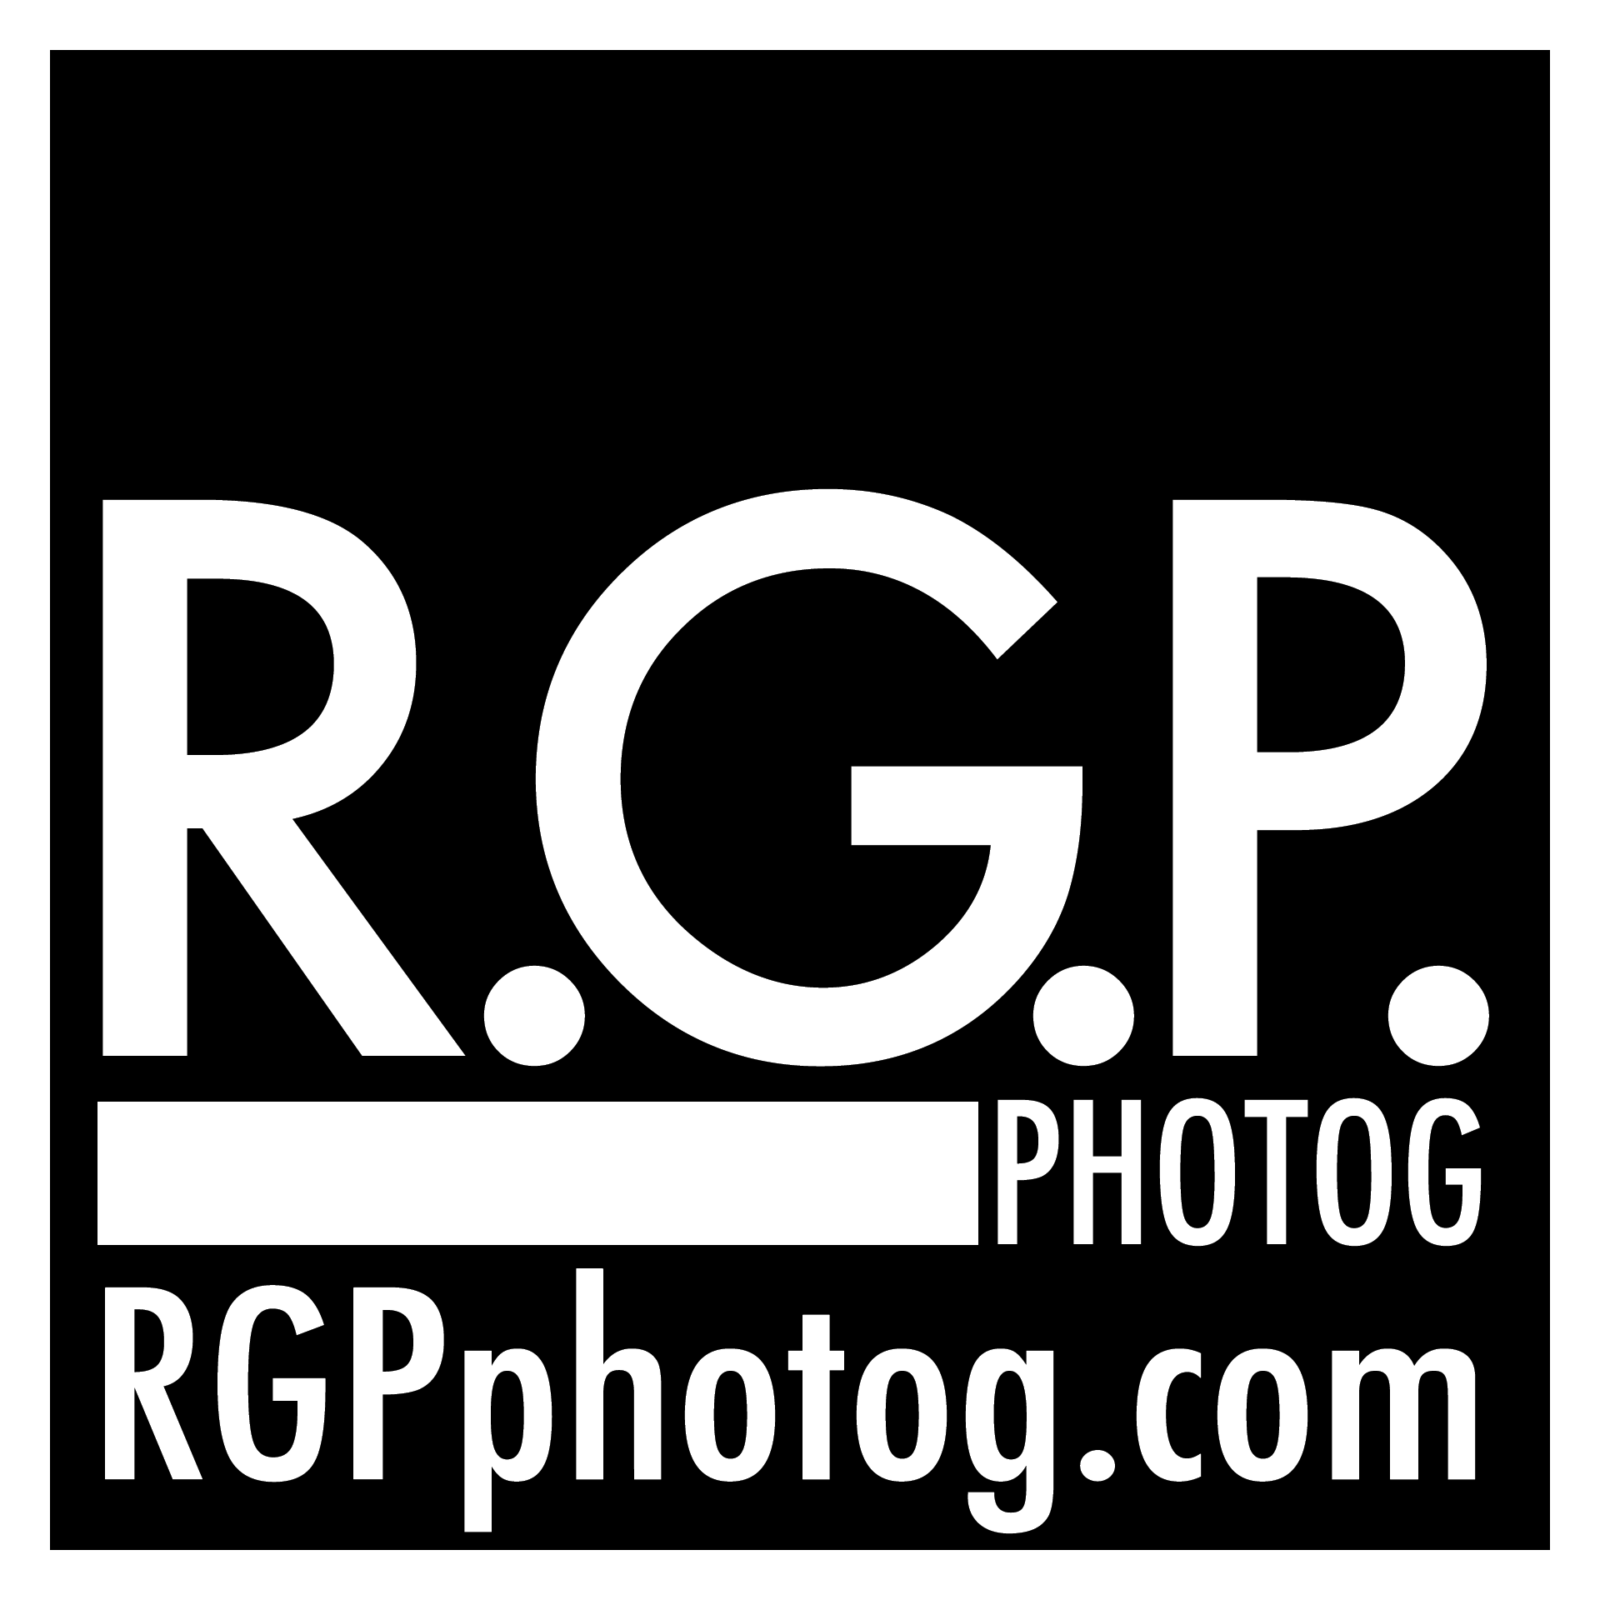 RGPphotog Logo